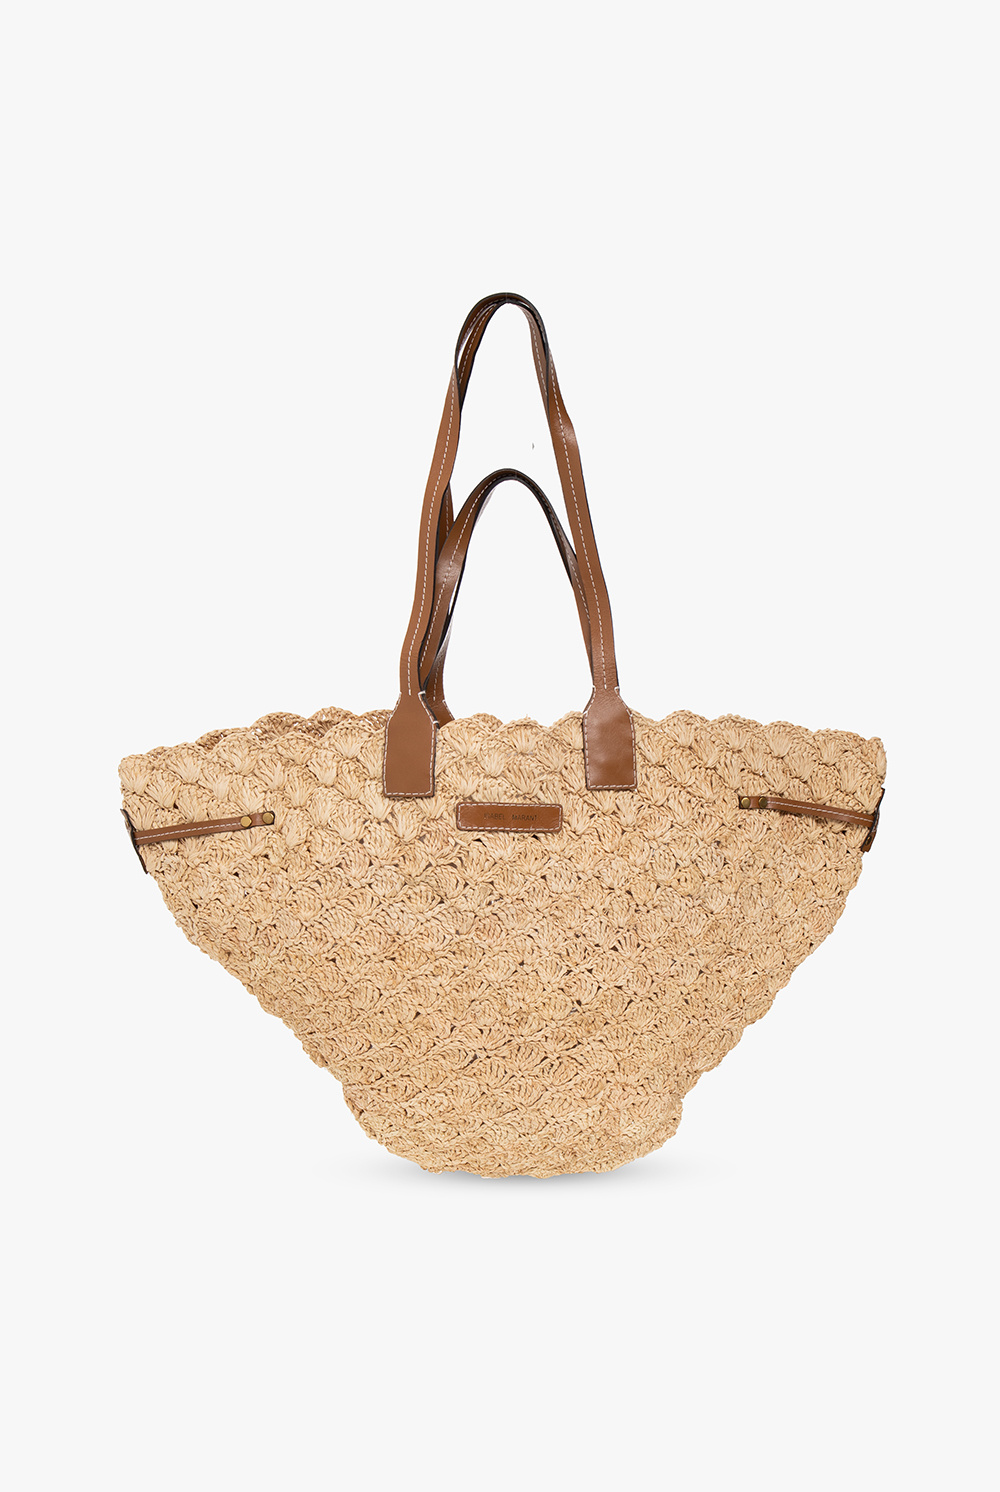 Isabel Marant ‘Coiba’ shopper bag